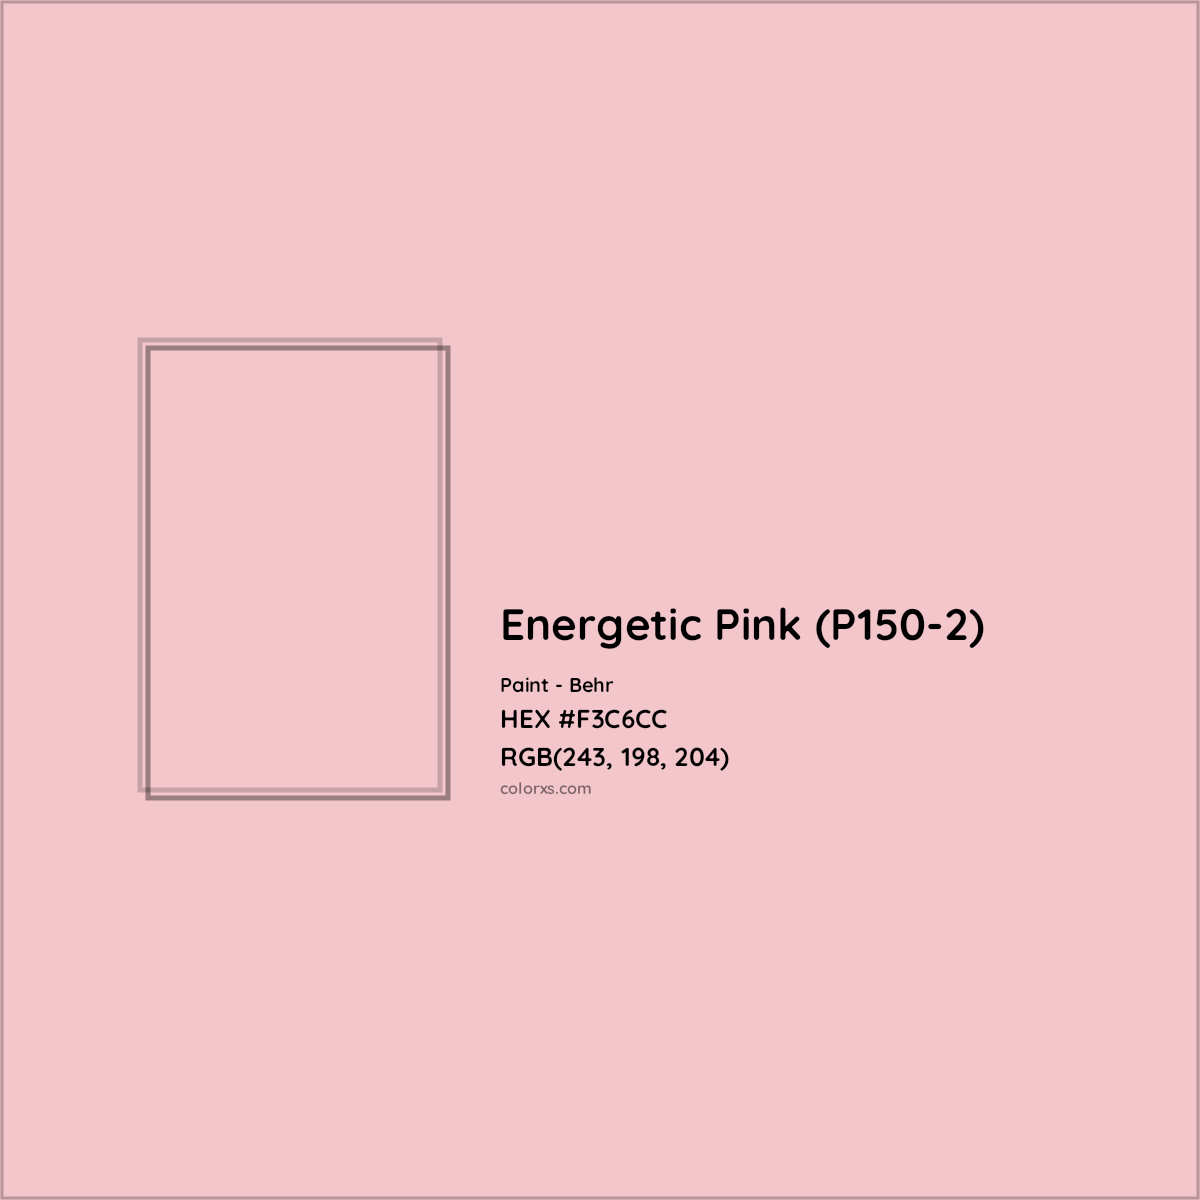 HEX #F3C6CC Energetic Pink (P150-2) Paint Behr - Color Code